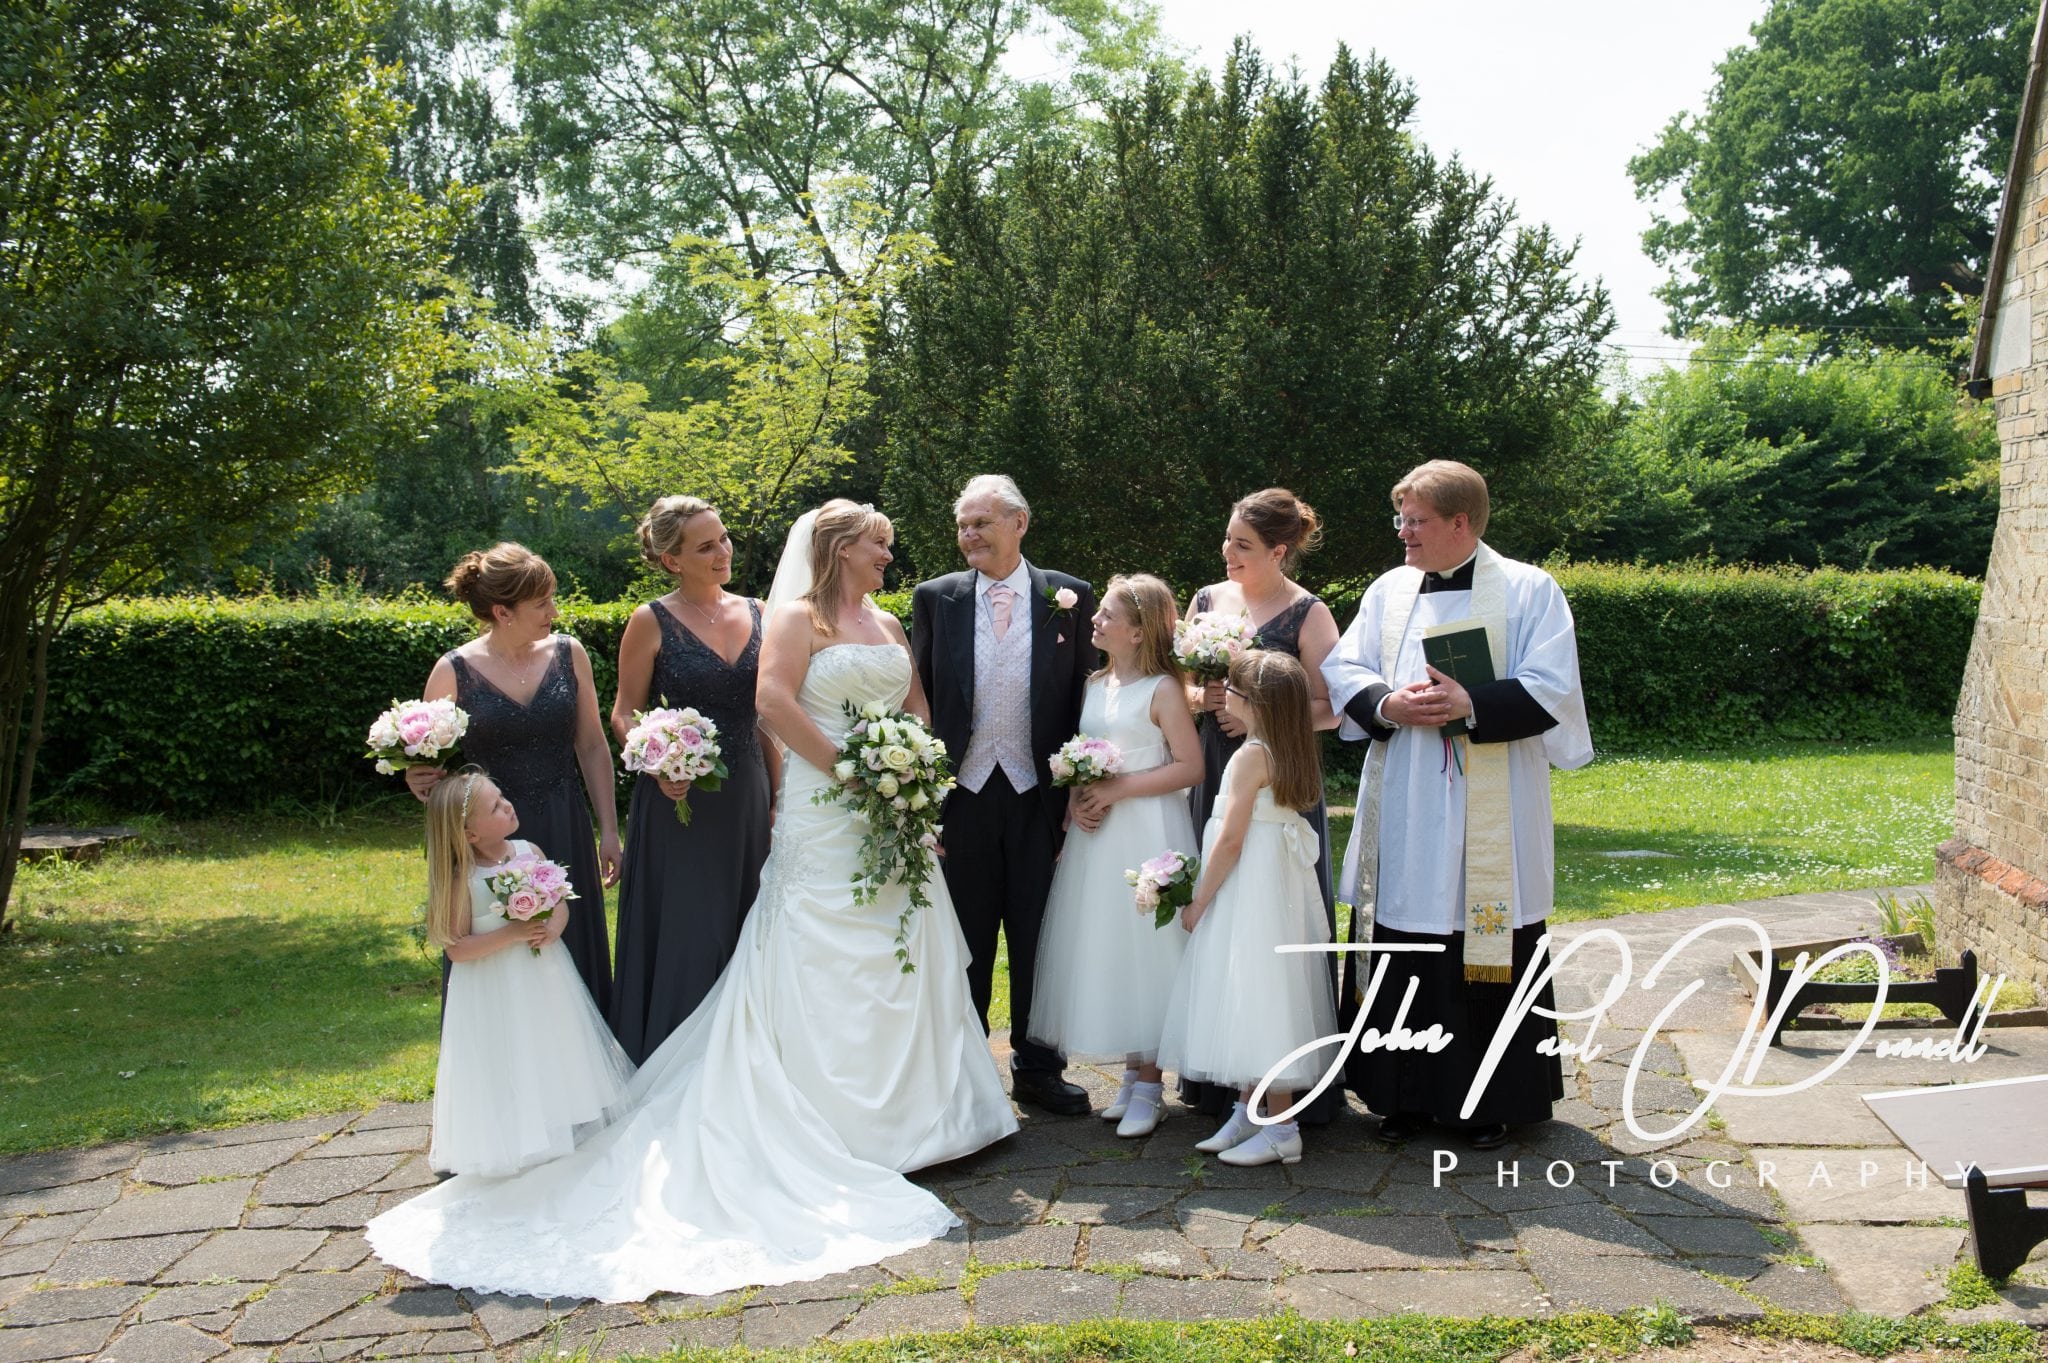 Nicola and Simons Wedding – Photographer Hertfordshire Theobalds Park